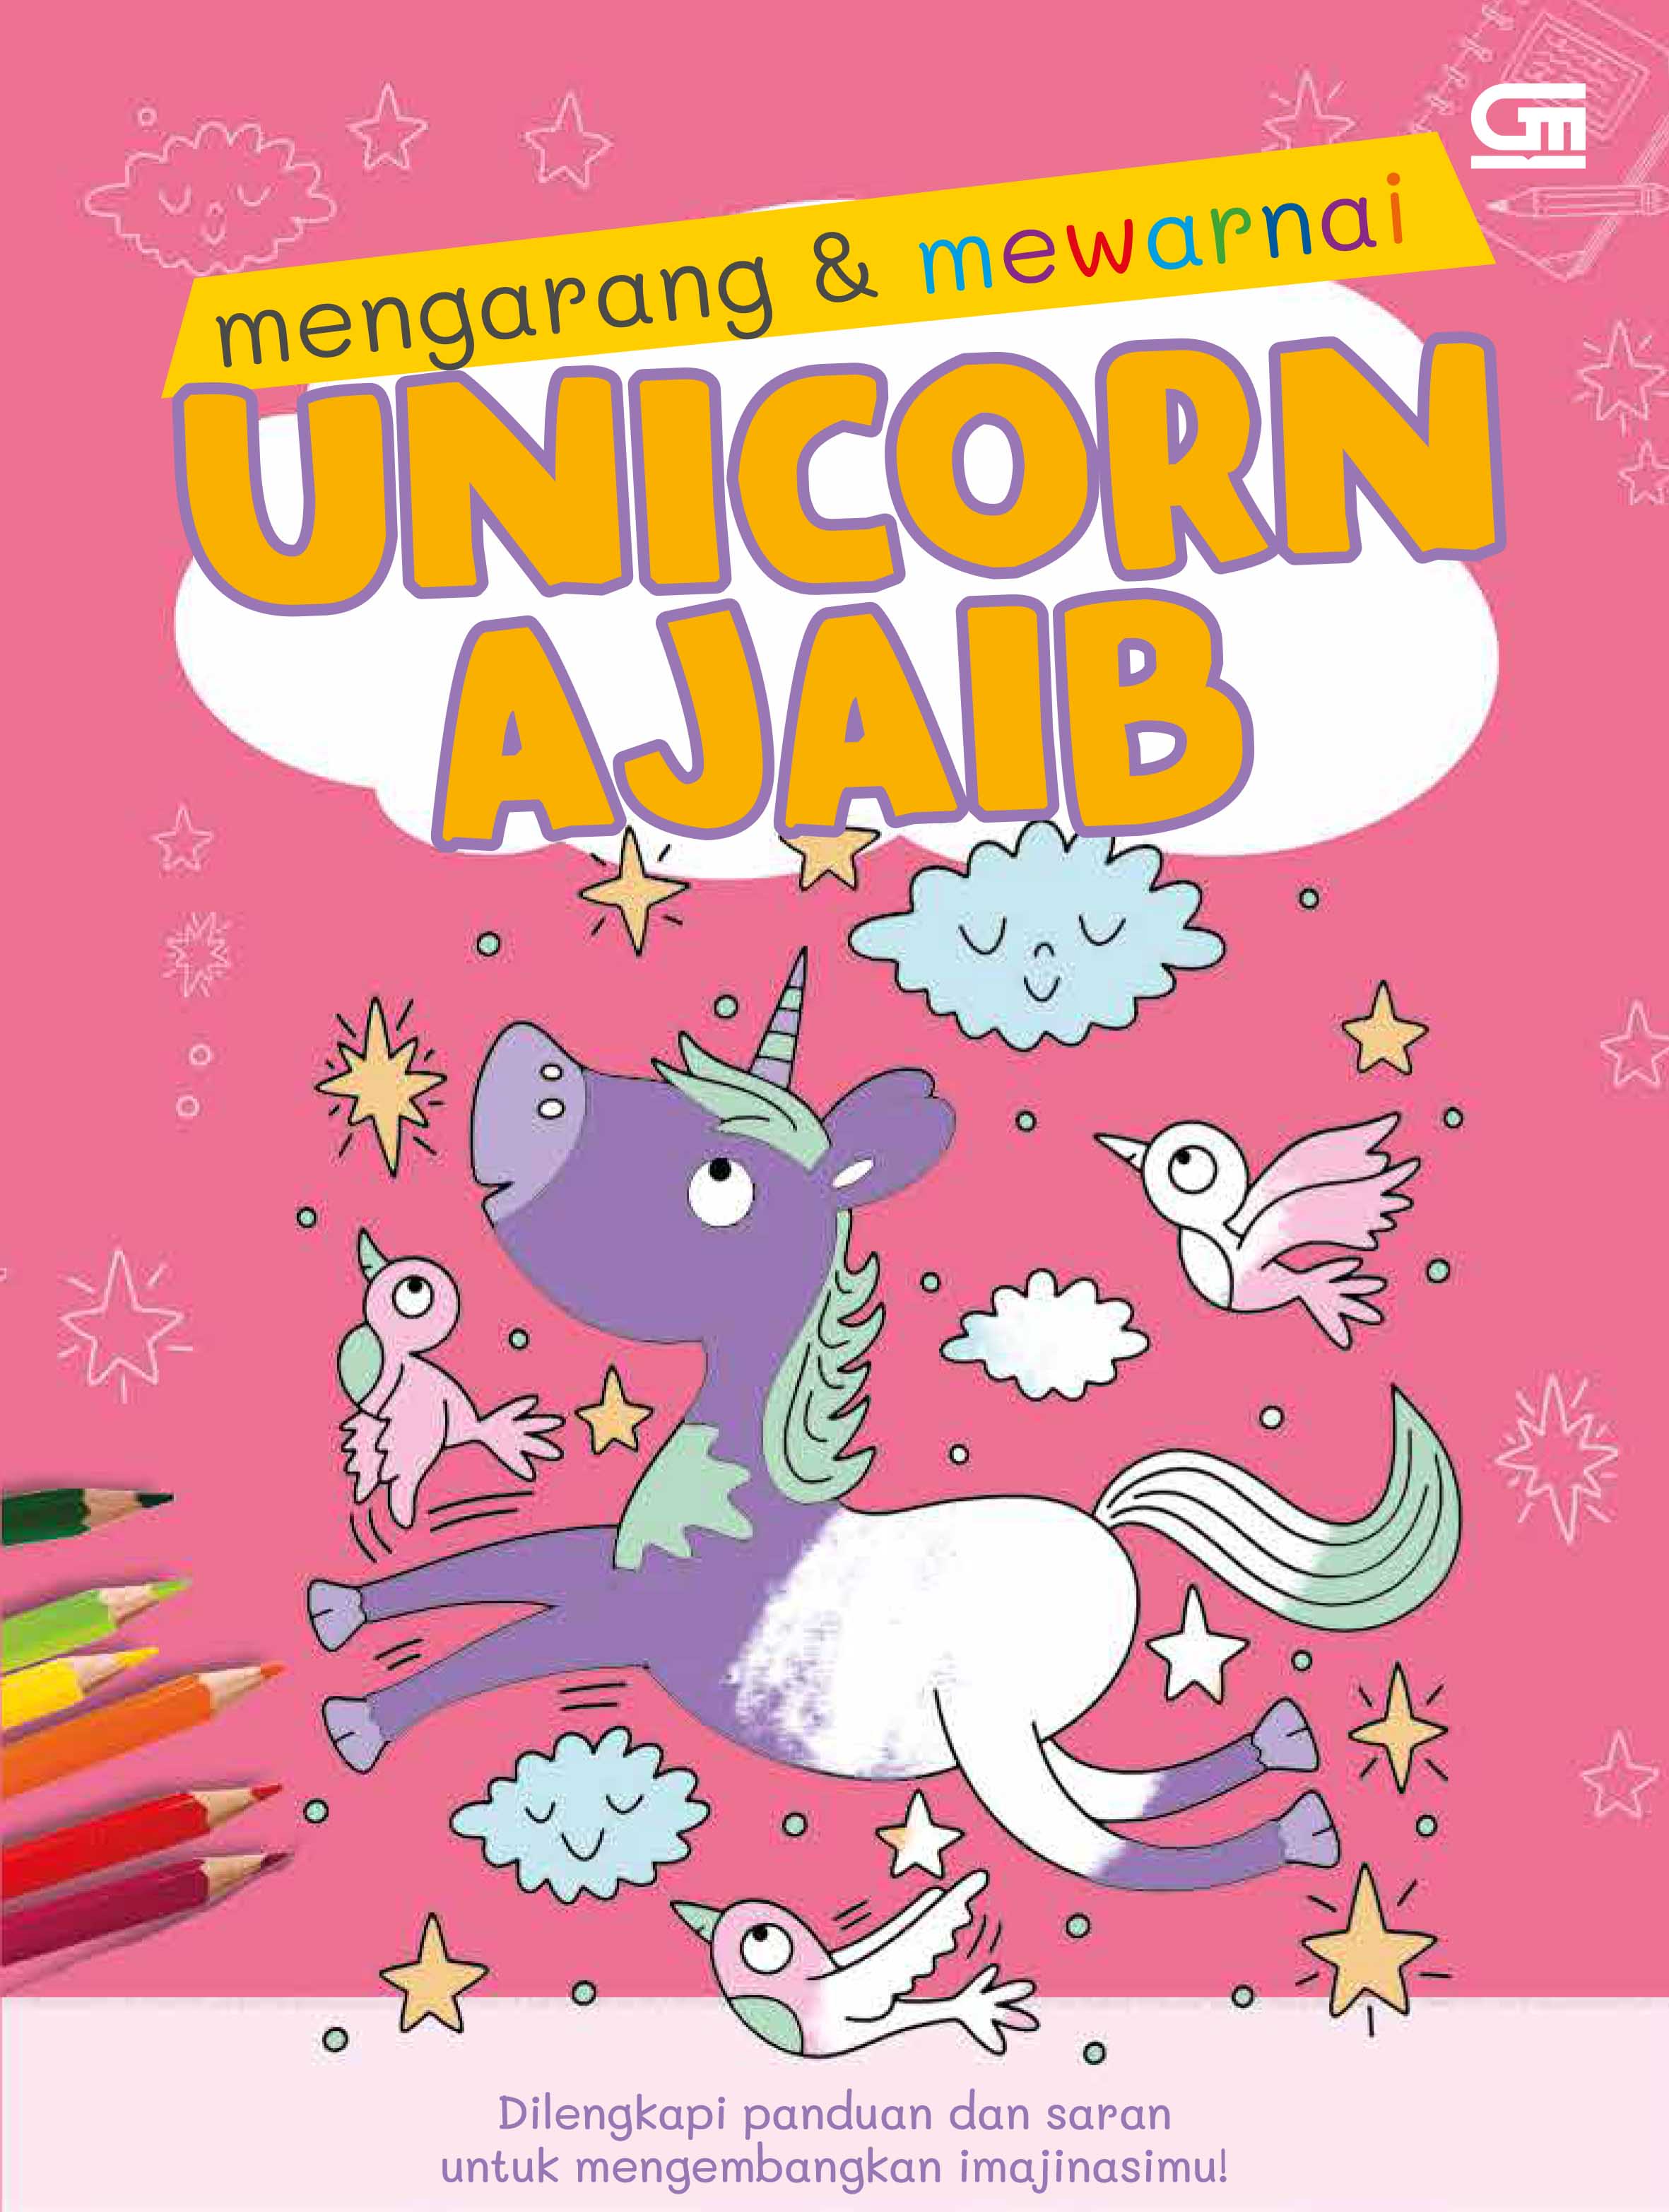 Mengarang & Mewarnai: Unicorn Ajaib